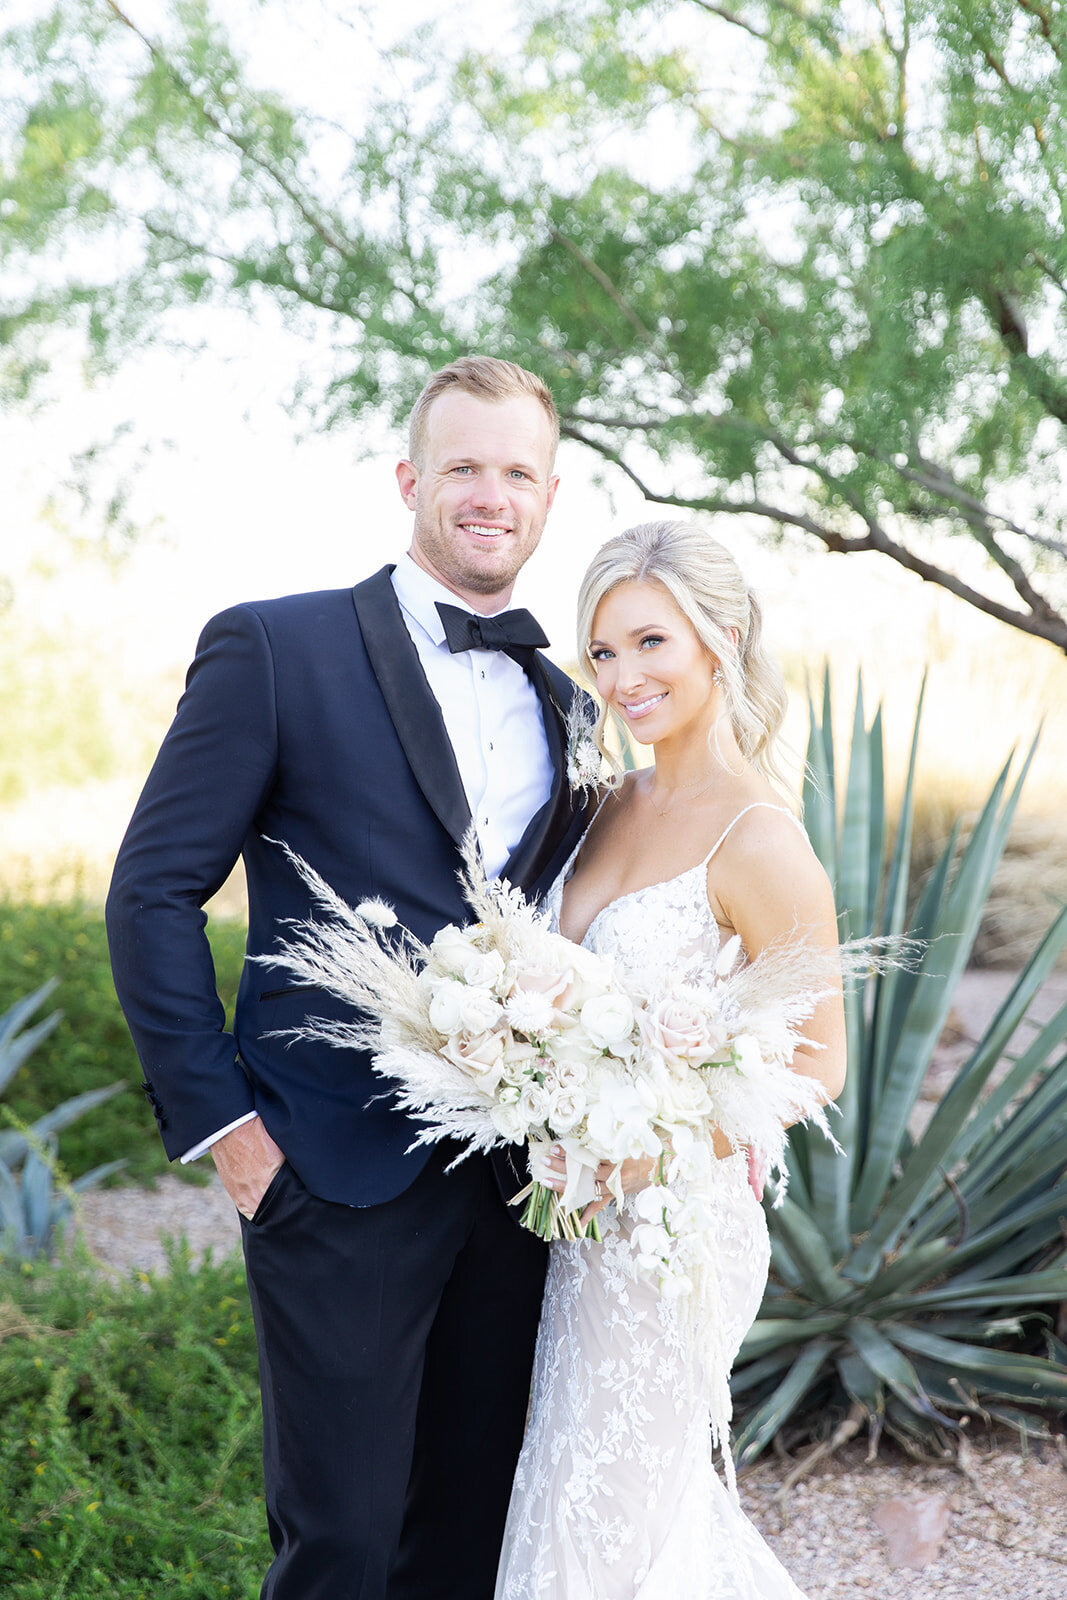 Karlie Colleen Photography - Ashley & Grant Wedding - The Paseo - Phoenix Arizona-672